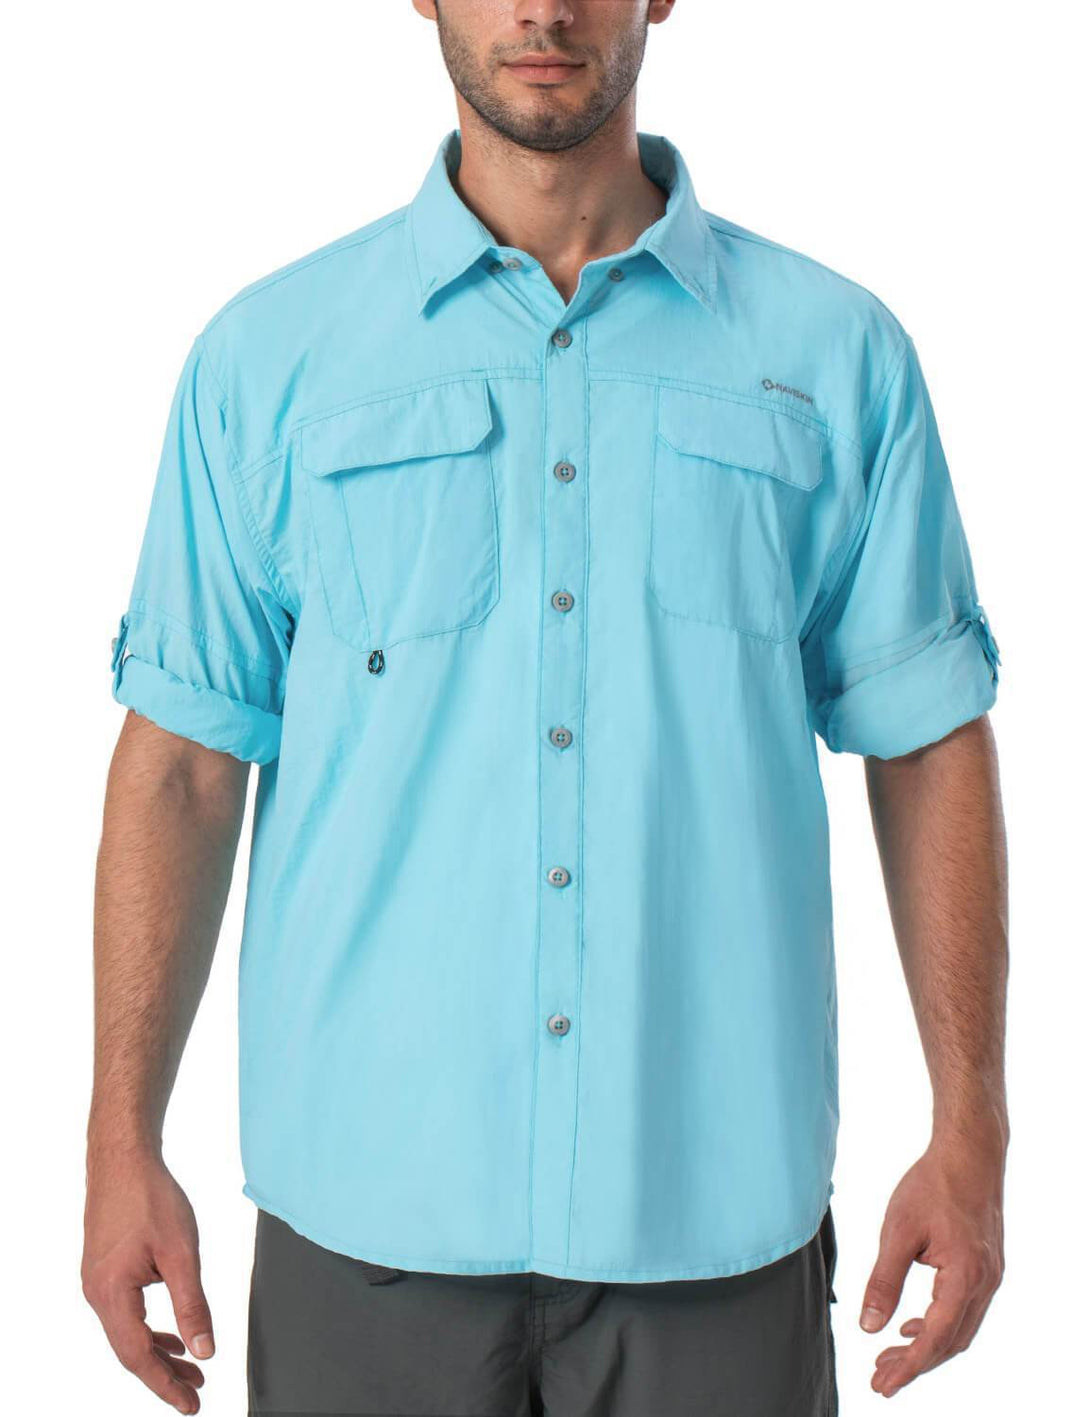 NORTE Men's UPF 50 Long Sleeve T-shirt: Sport/Fishing, Mesh SPF/UV